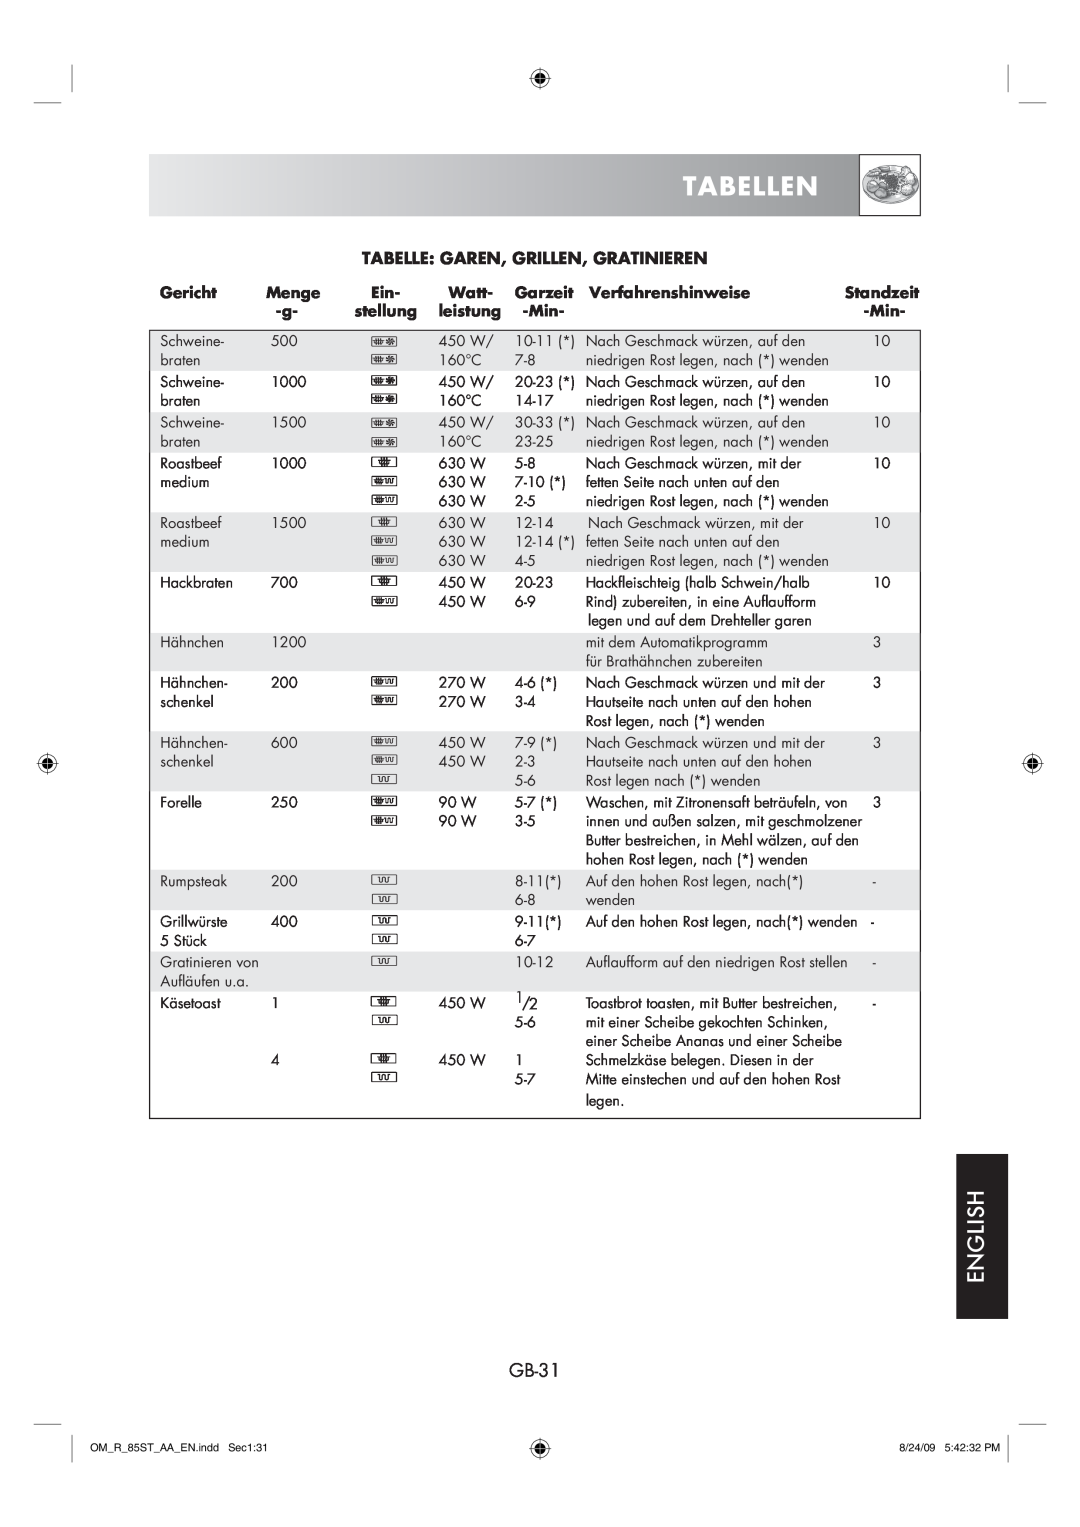 Sharp R-85ST-AA operation manual Tabellen, English, GB-31, Tabelle Garen, Grillen, Gratinieren 